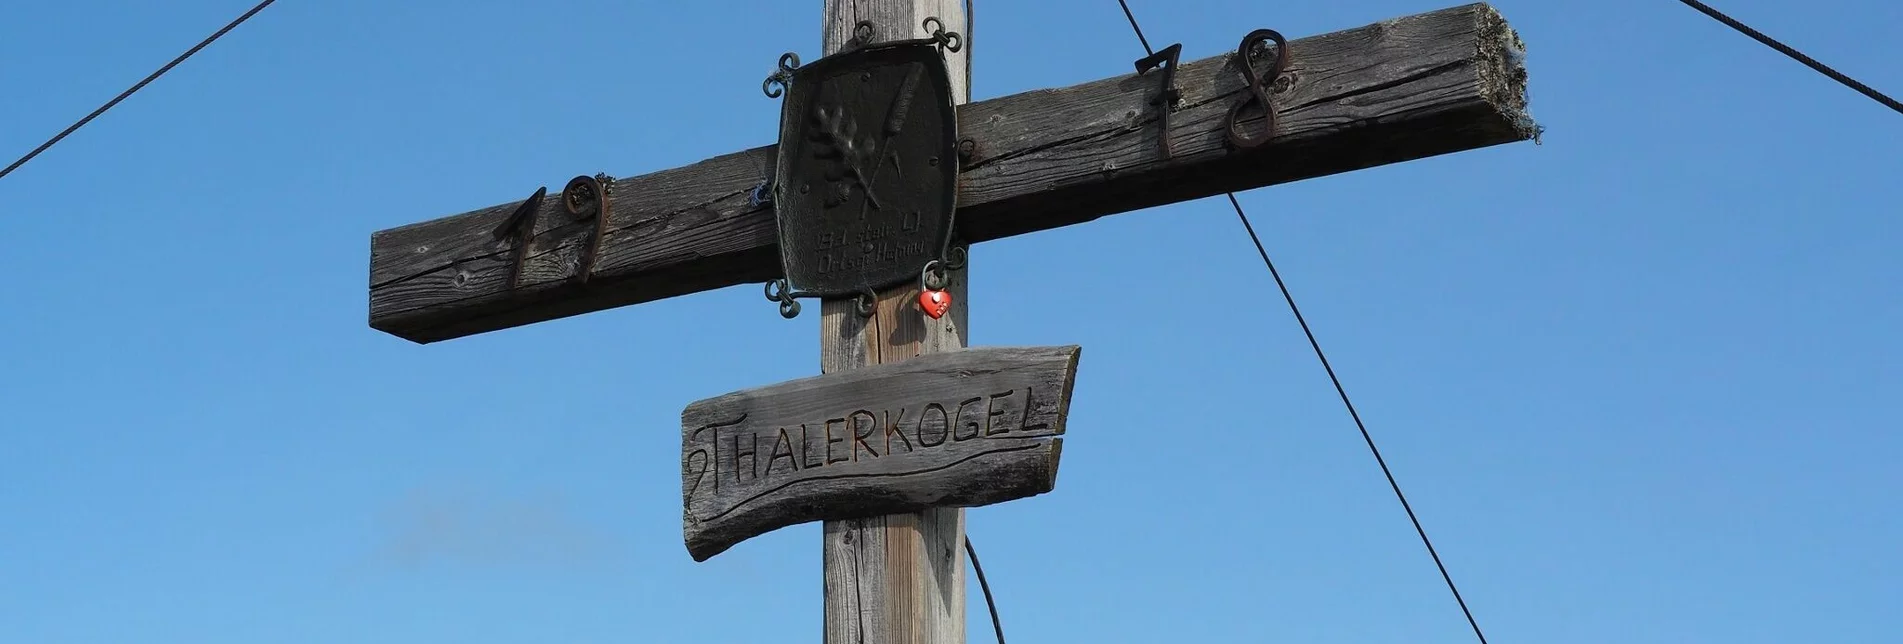 Hiking route Thalerkogel - Touren-Impression #1 | © Tourismusverband ERZBERG LEOBEN